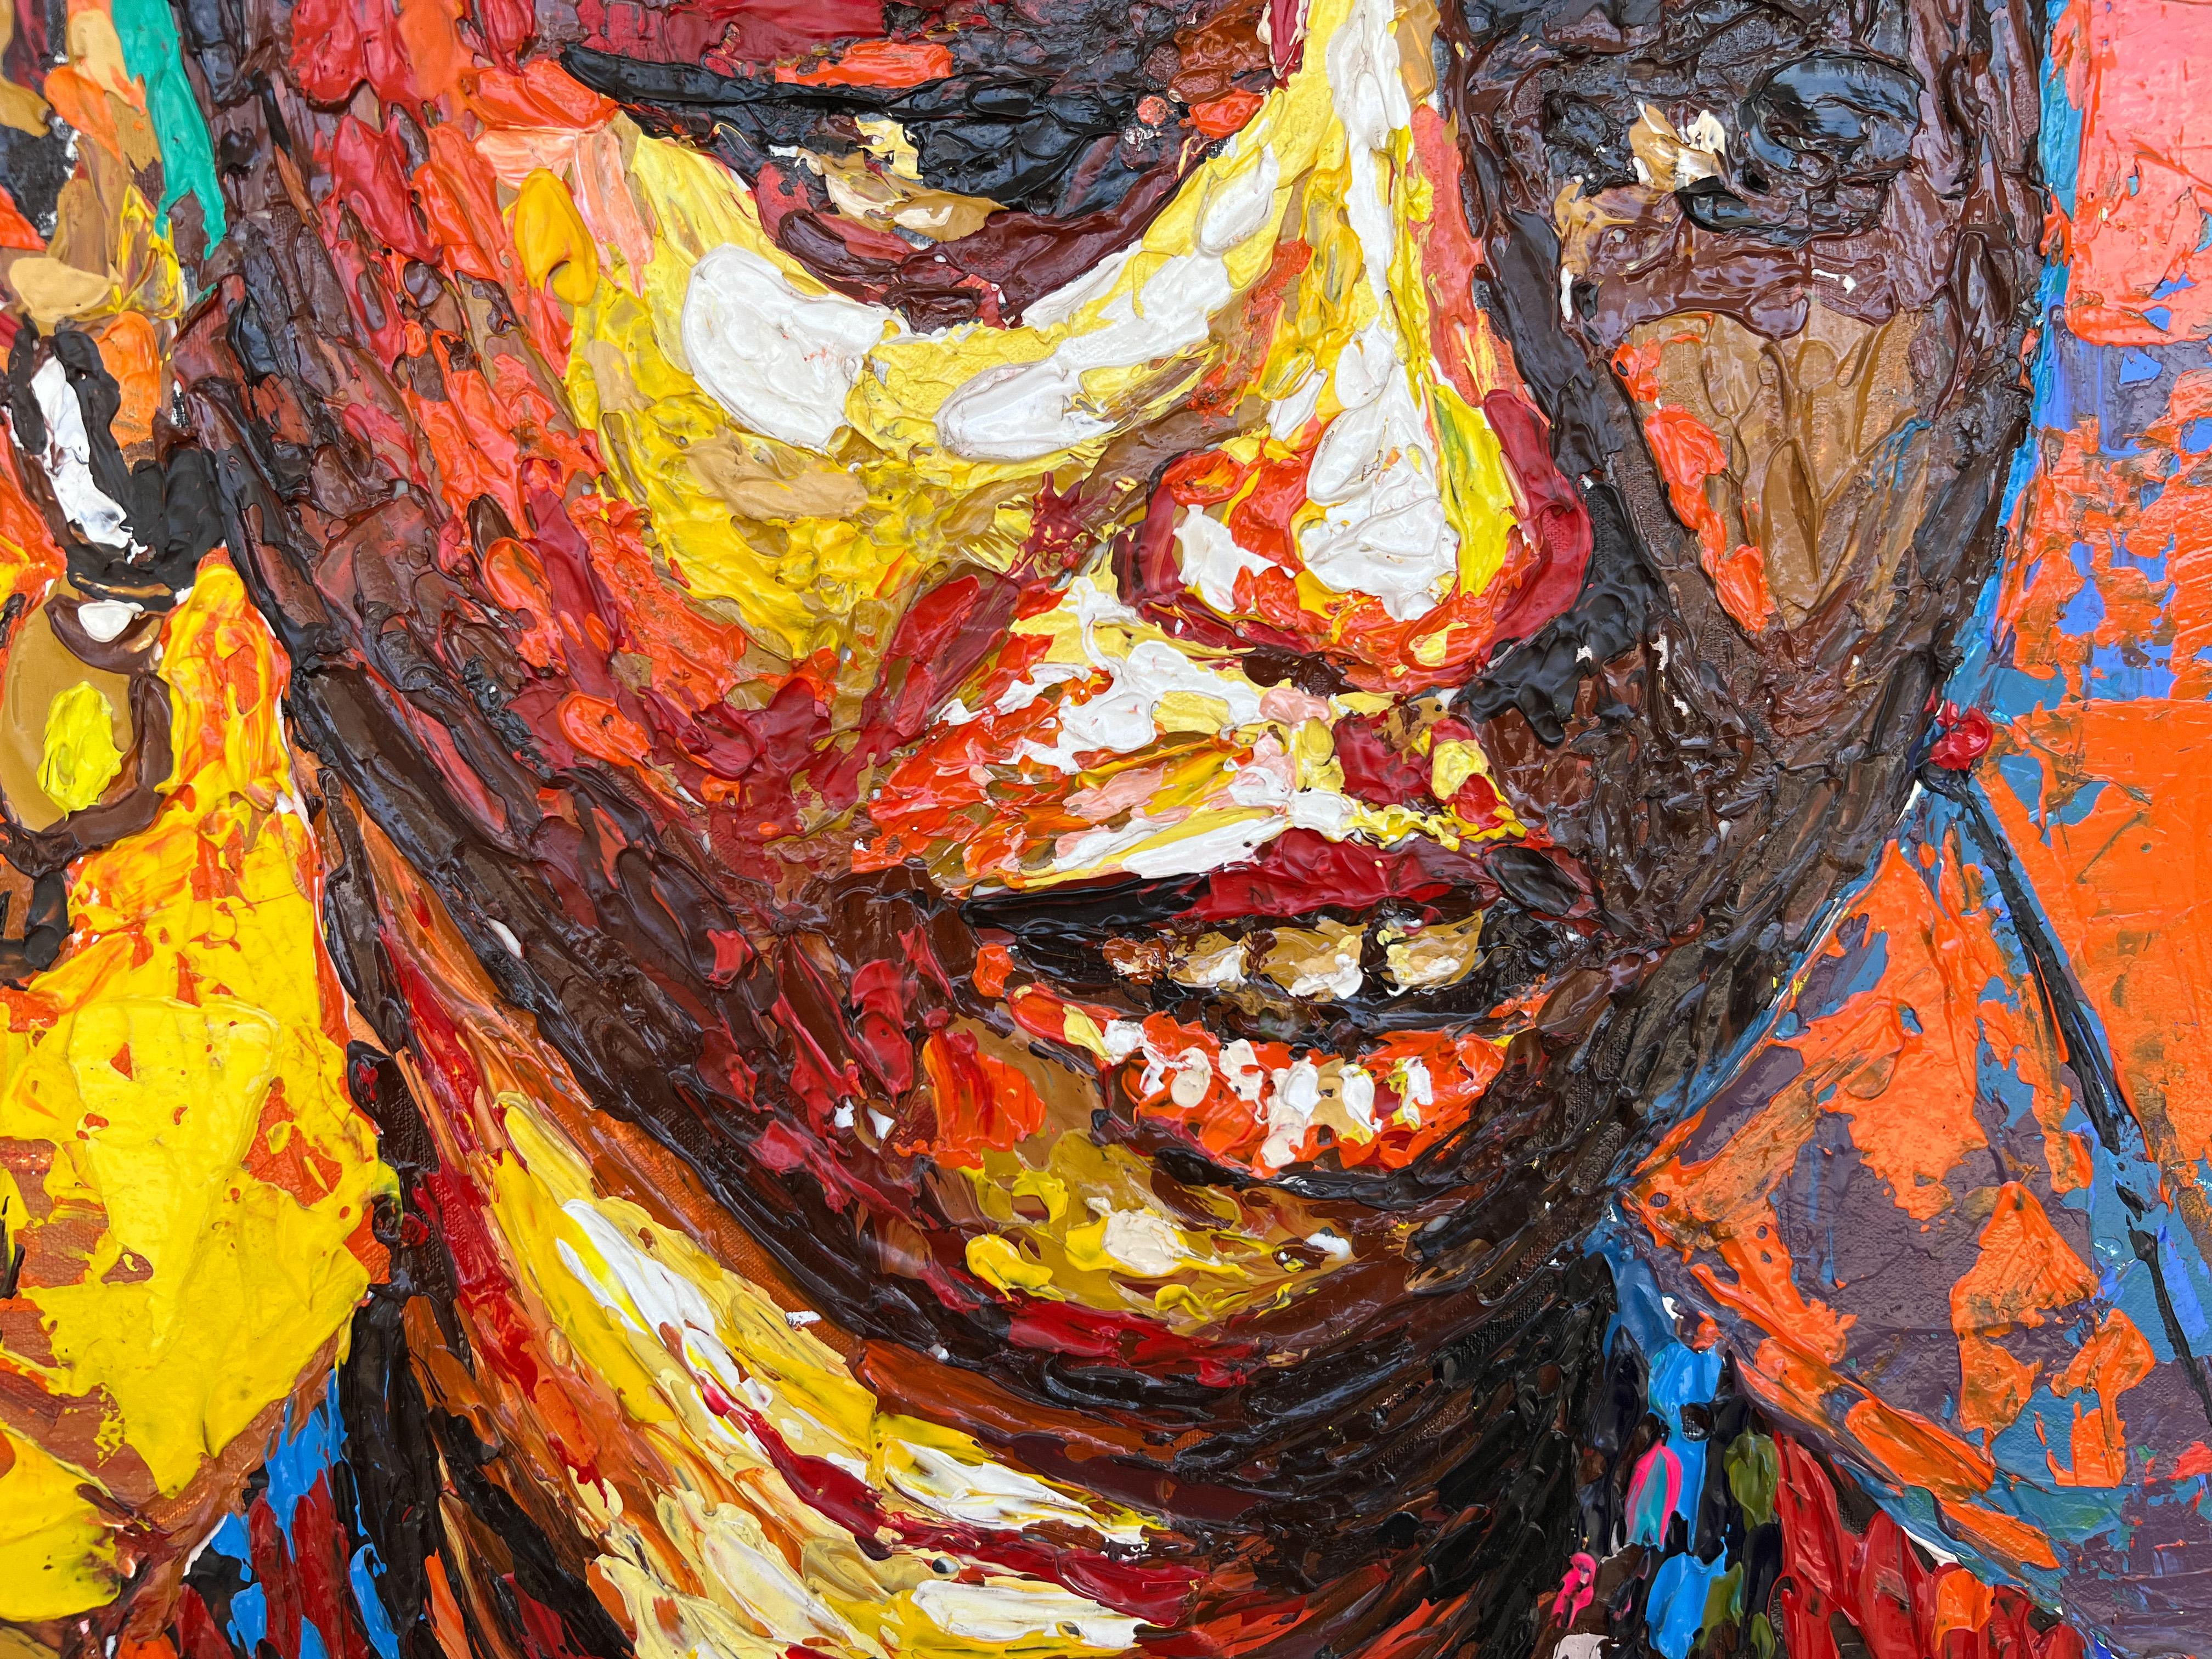 The Melani Goodness - Painting by Dagunduro Adeniyi